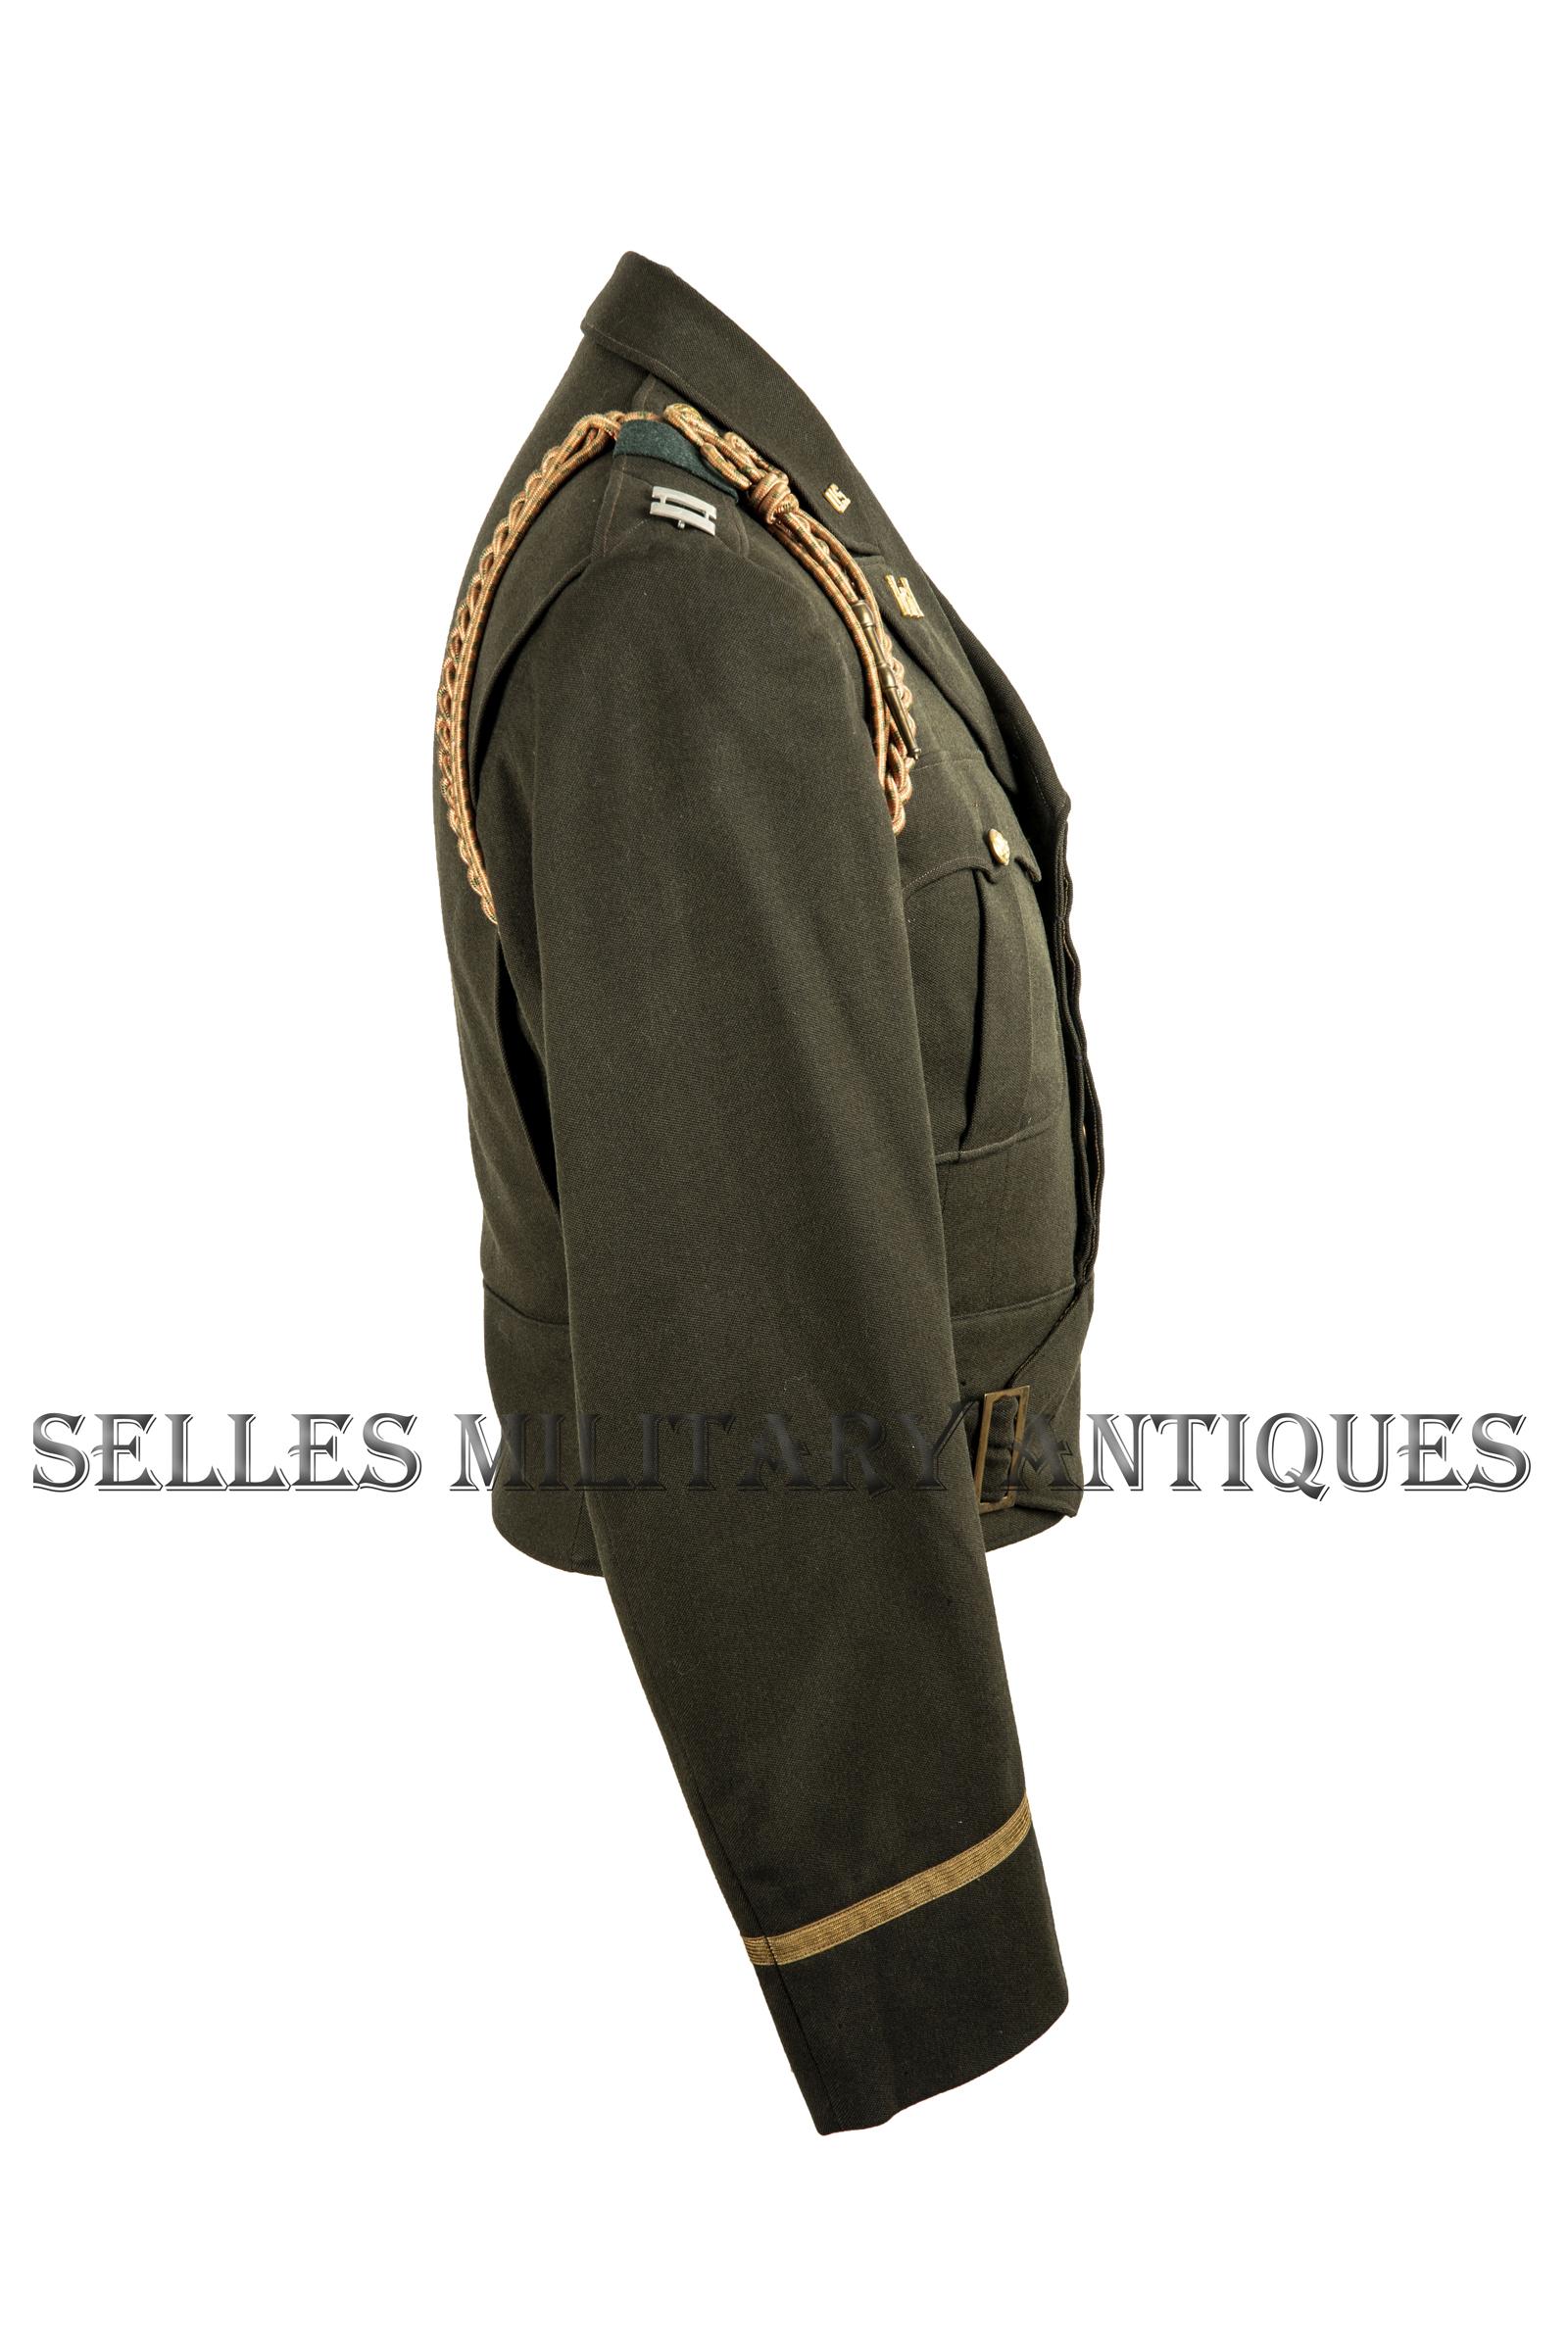 blouson-ike-jacket-officier-engineer-82eme-airborne-us-(2)